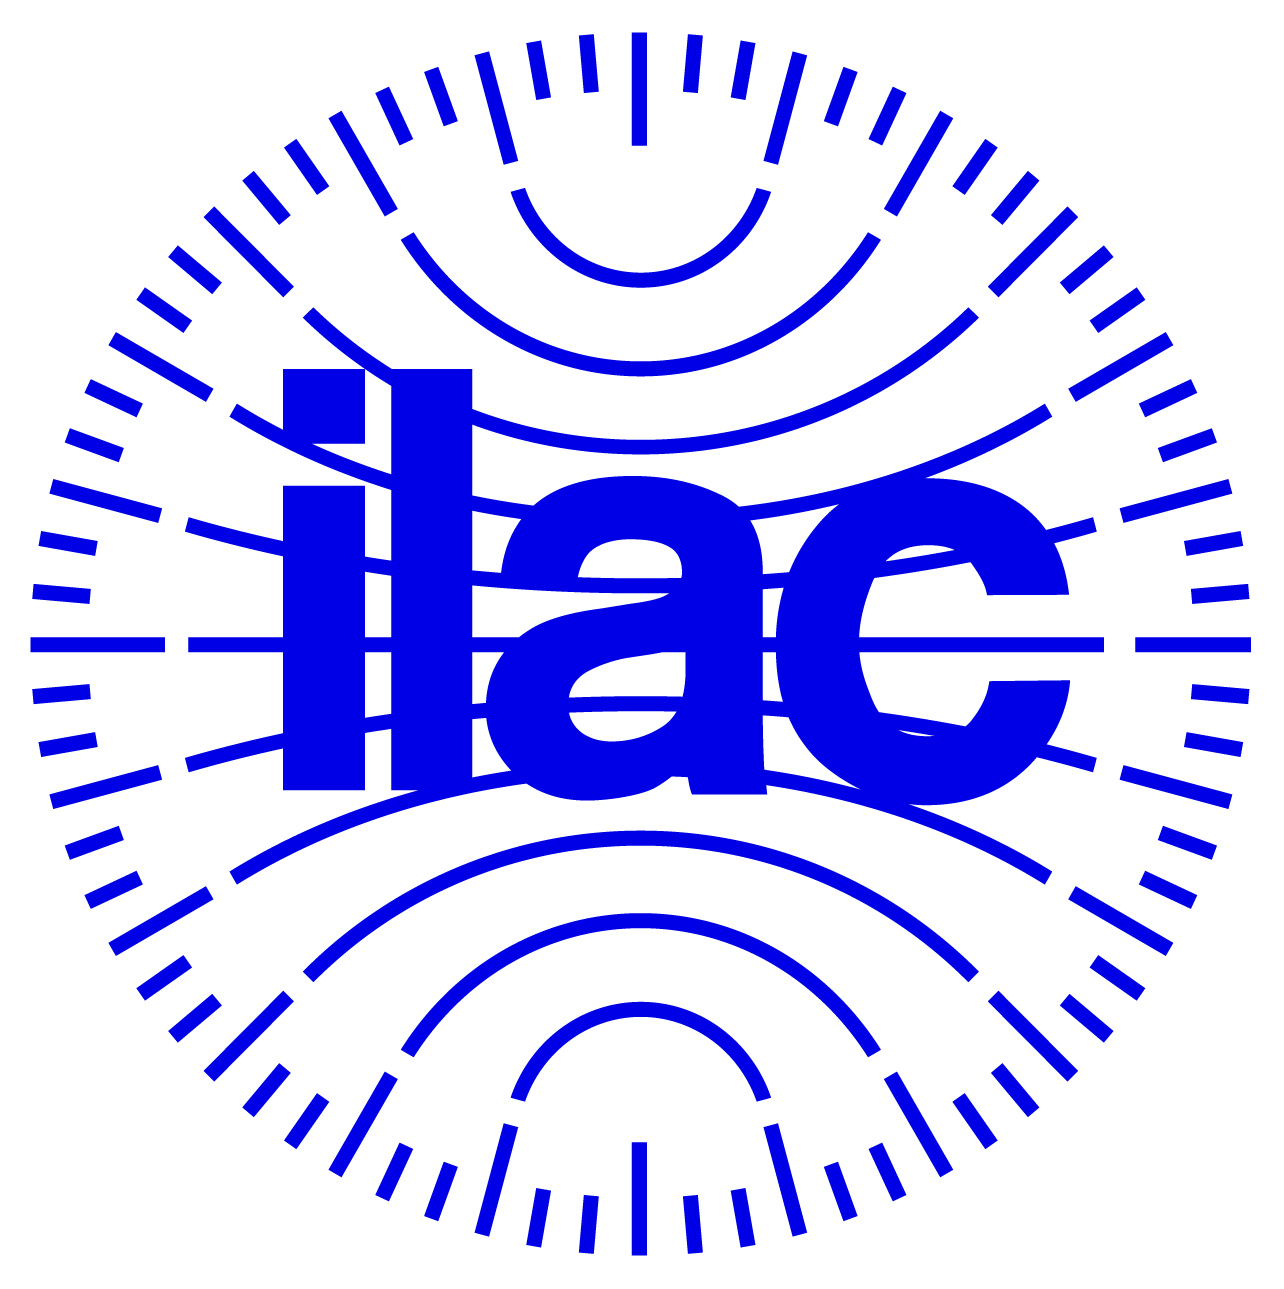 ILAC Logo